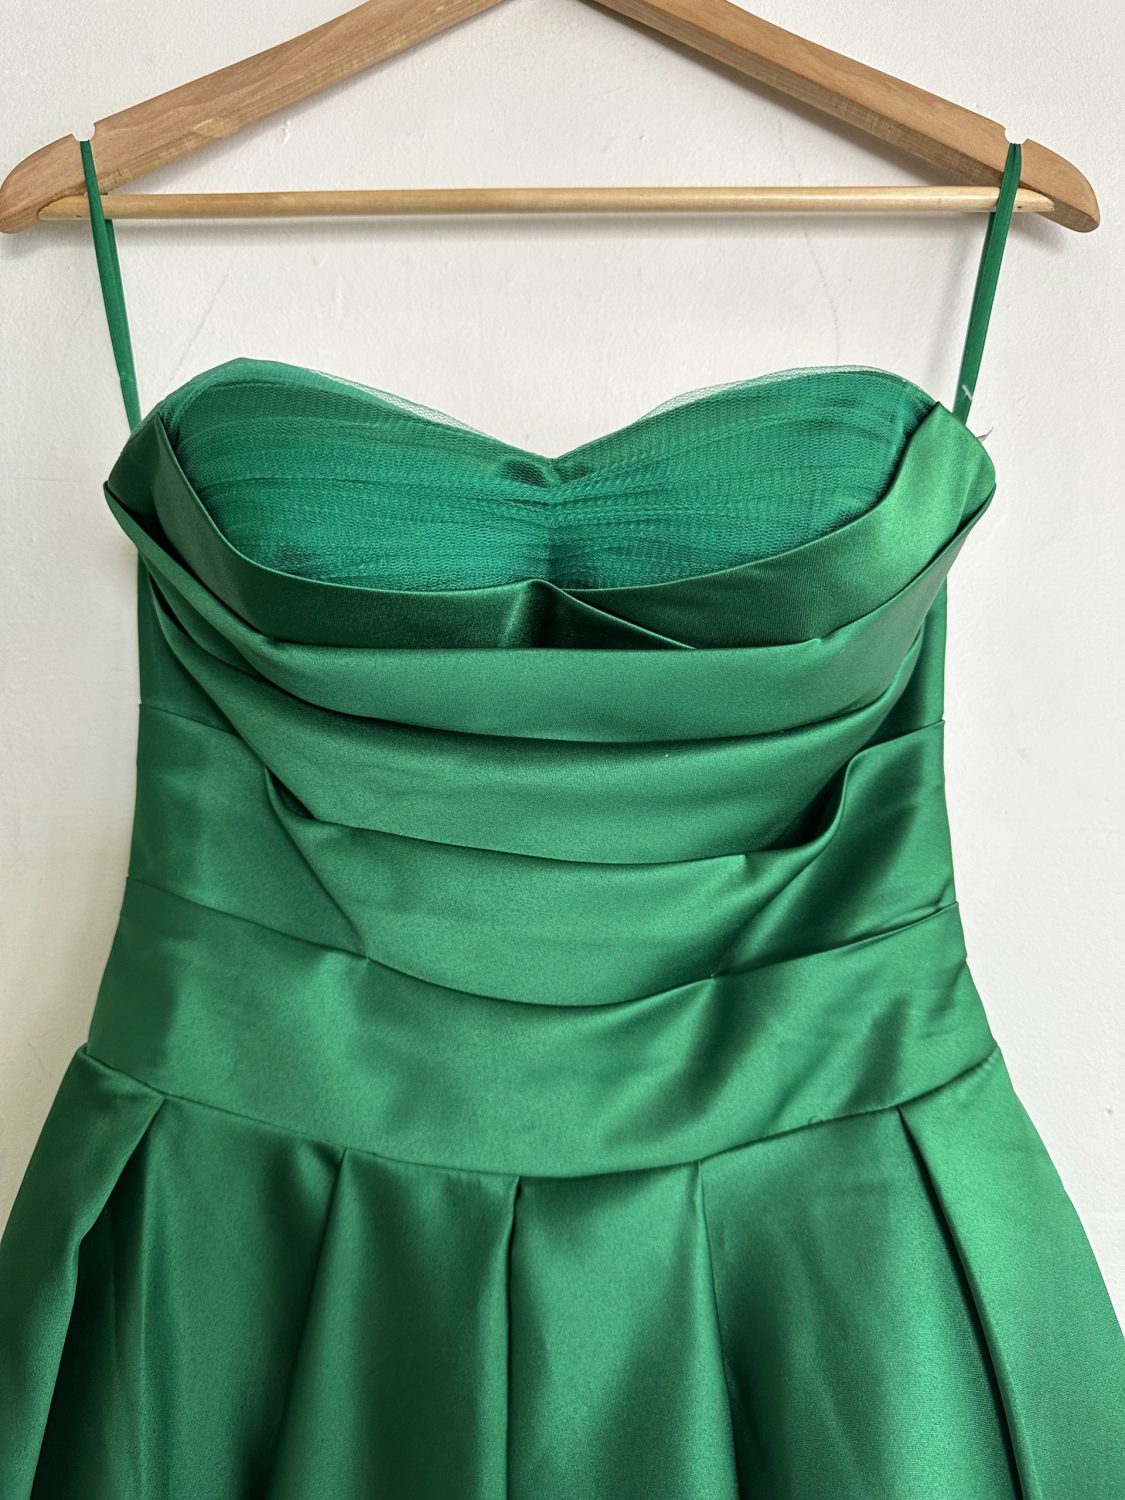 STUNNING 50's INSPIRED GREEN STRAPLESS DRESS | Chaos Bazaar Vintage